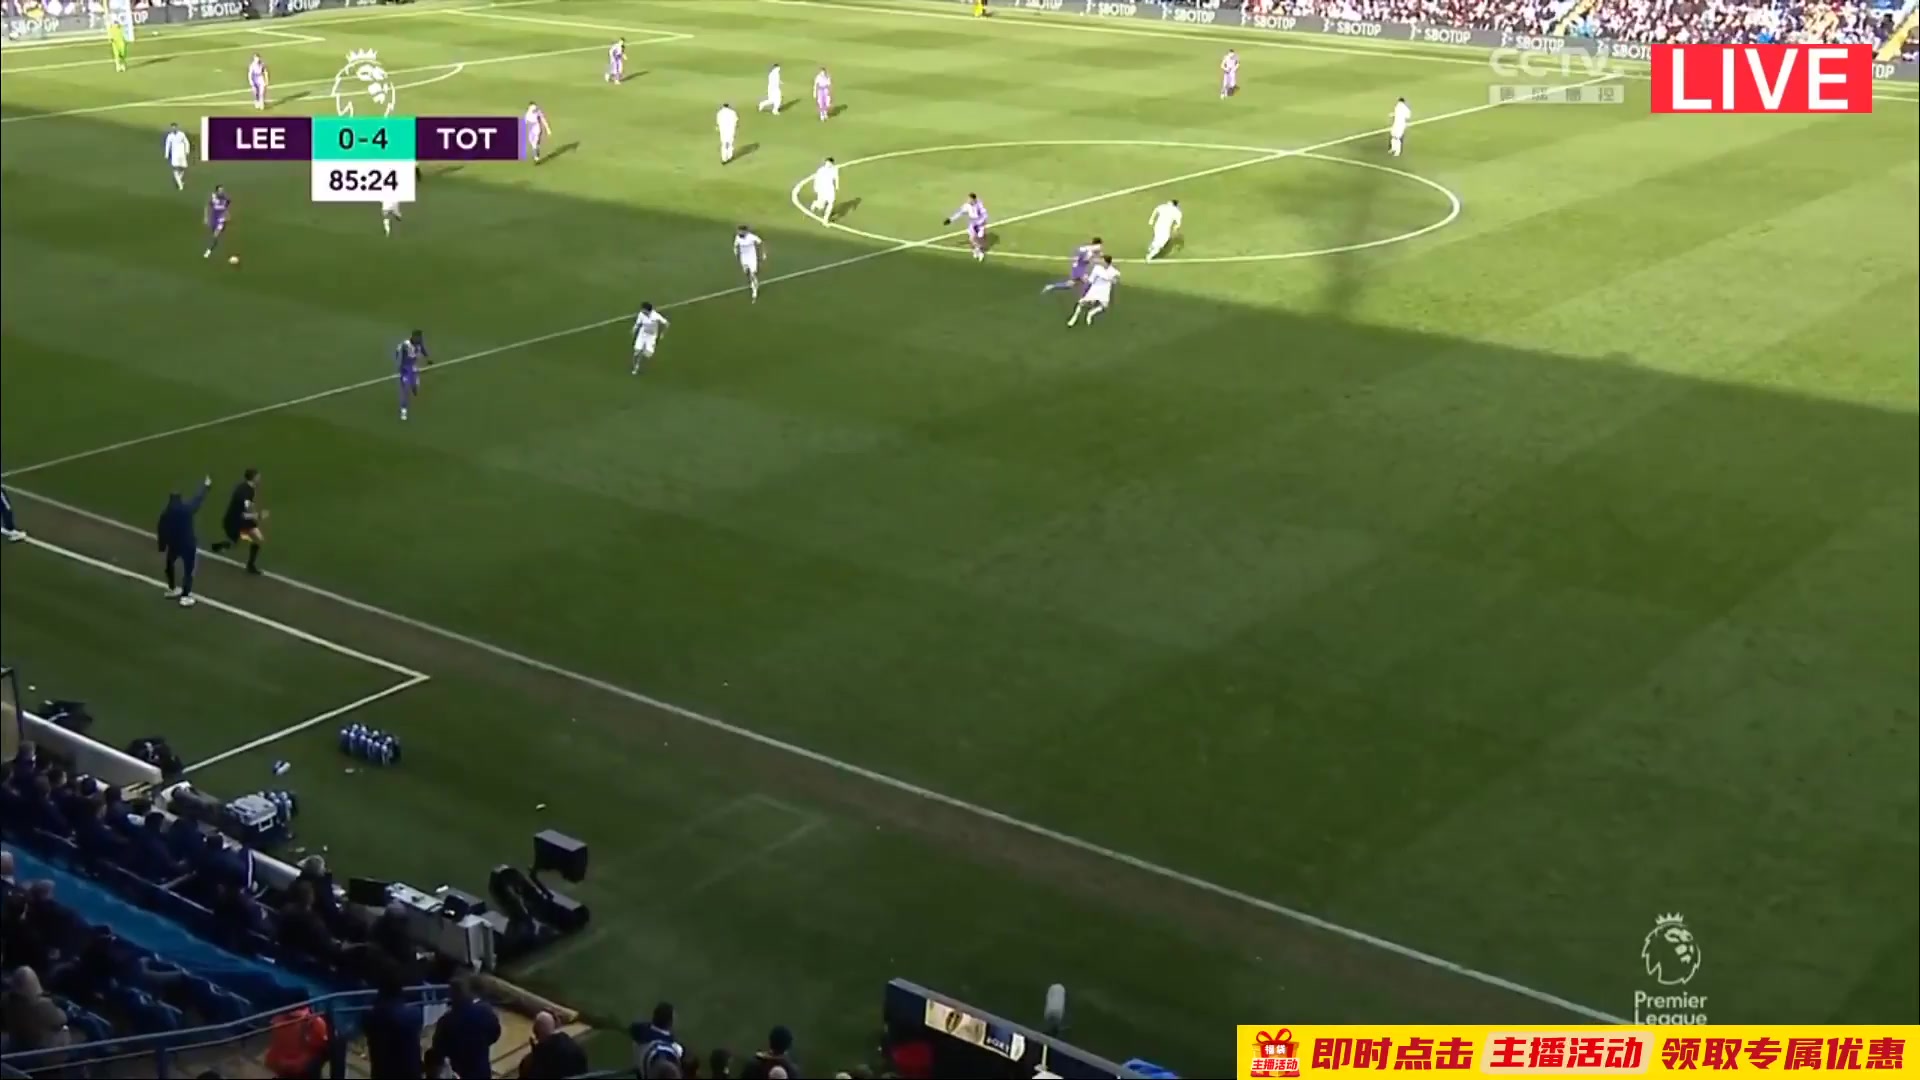 EPL Leeds United Vs Tottenham Hotspur Son Heung Min Goal in 86 min, Score 0:4